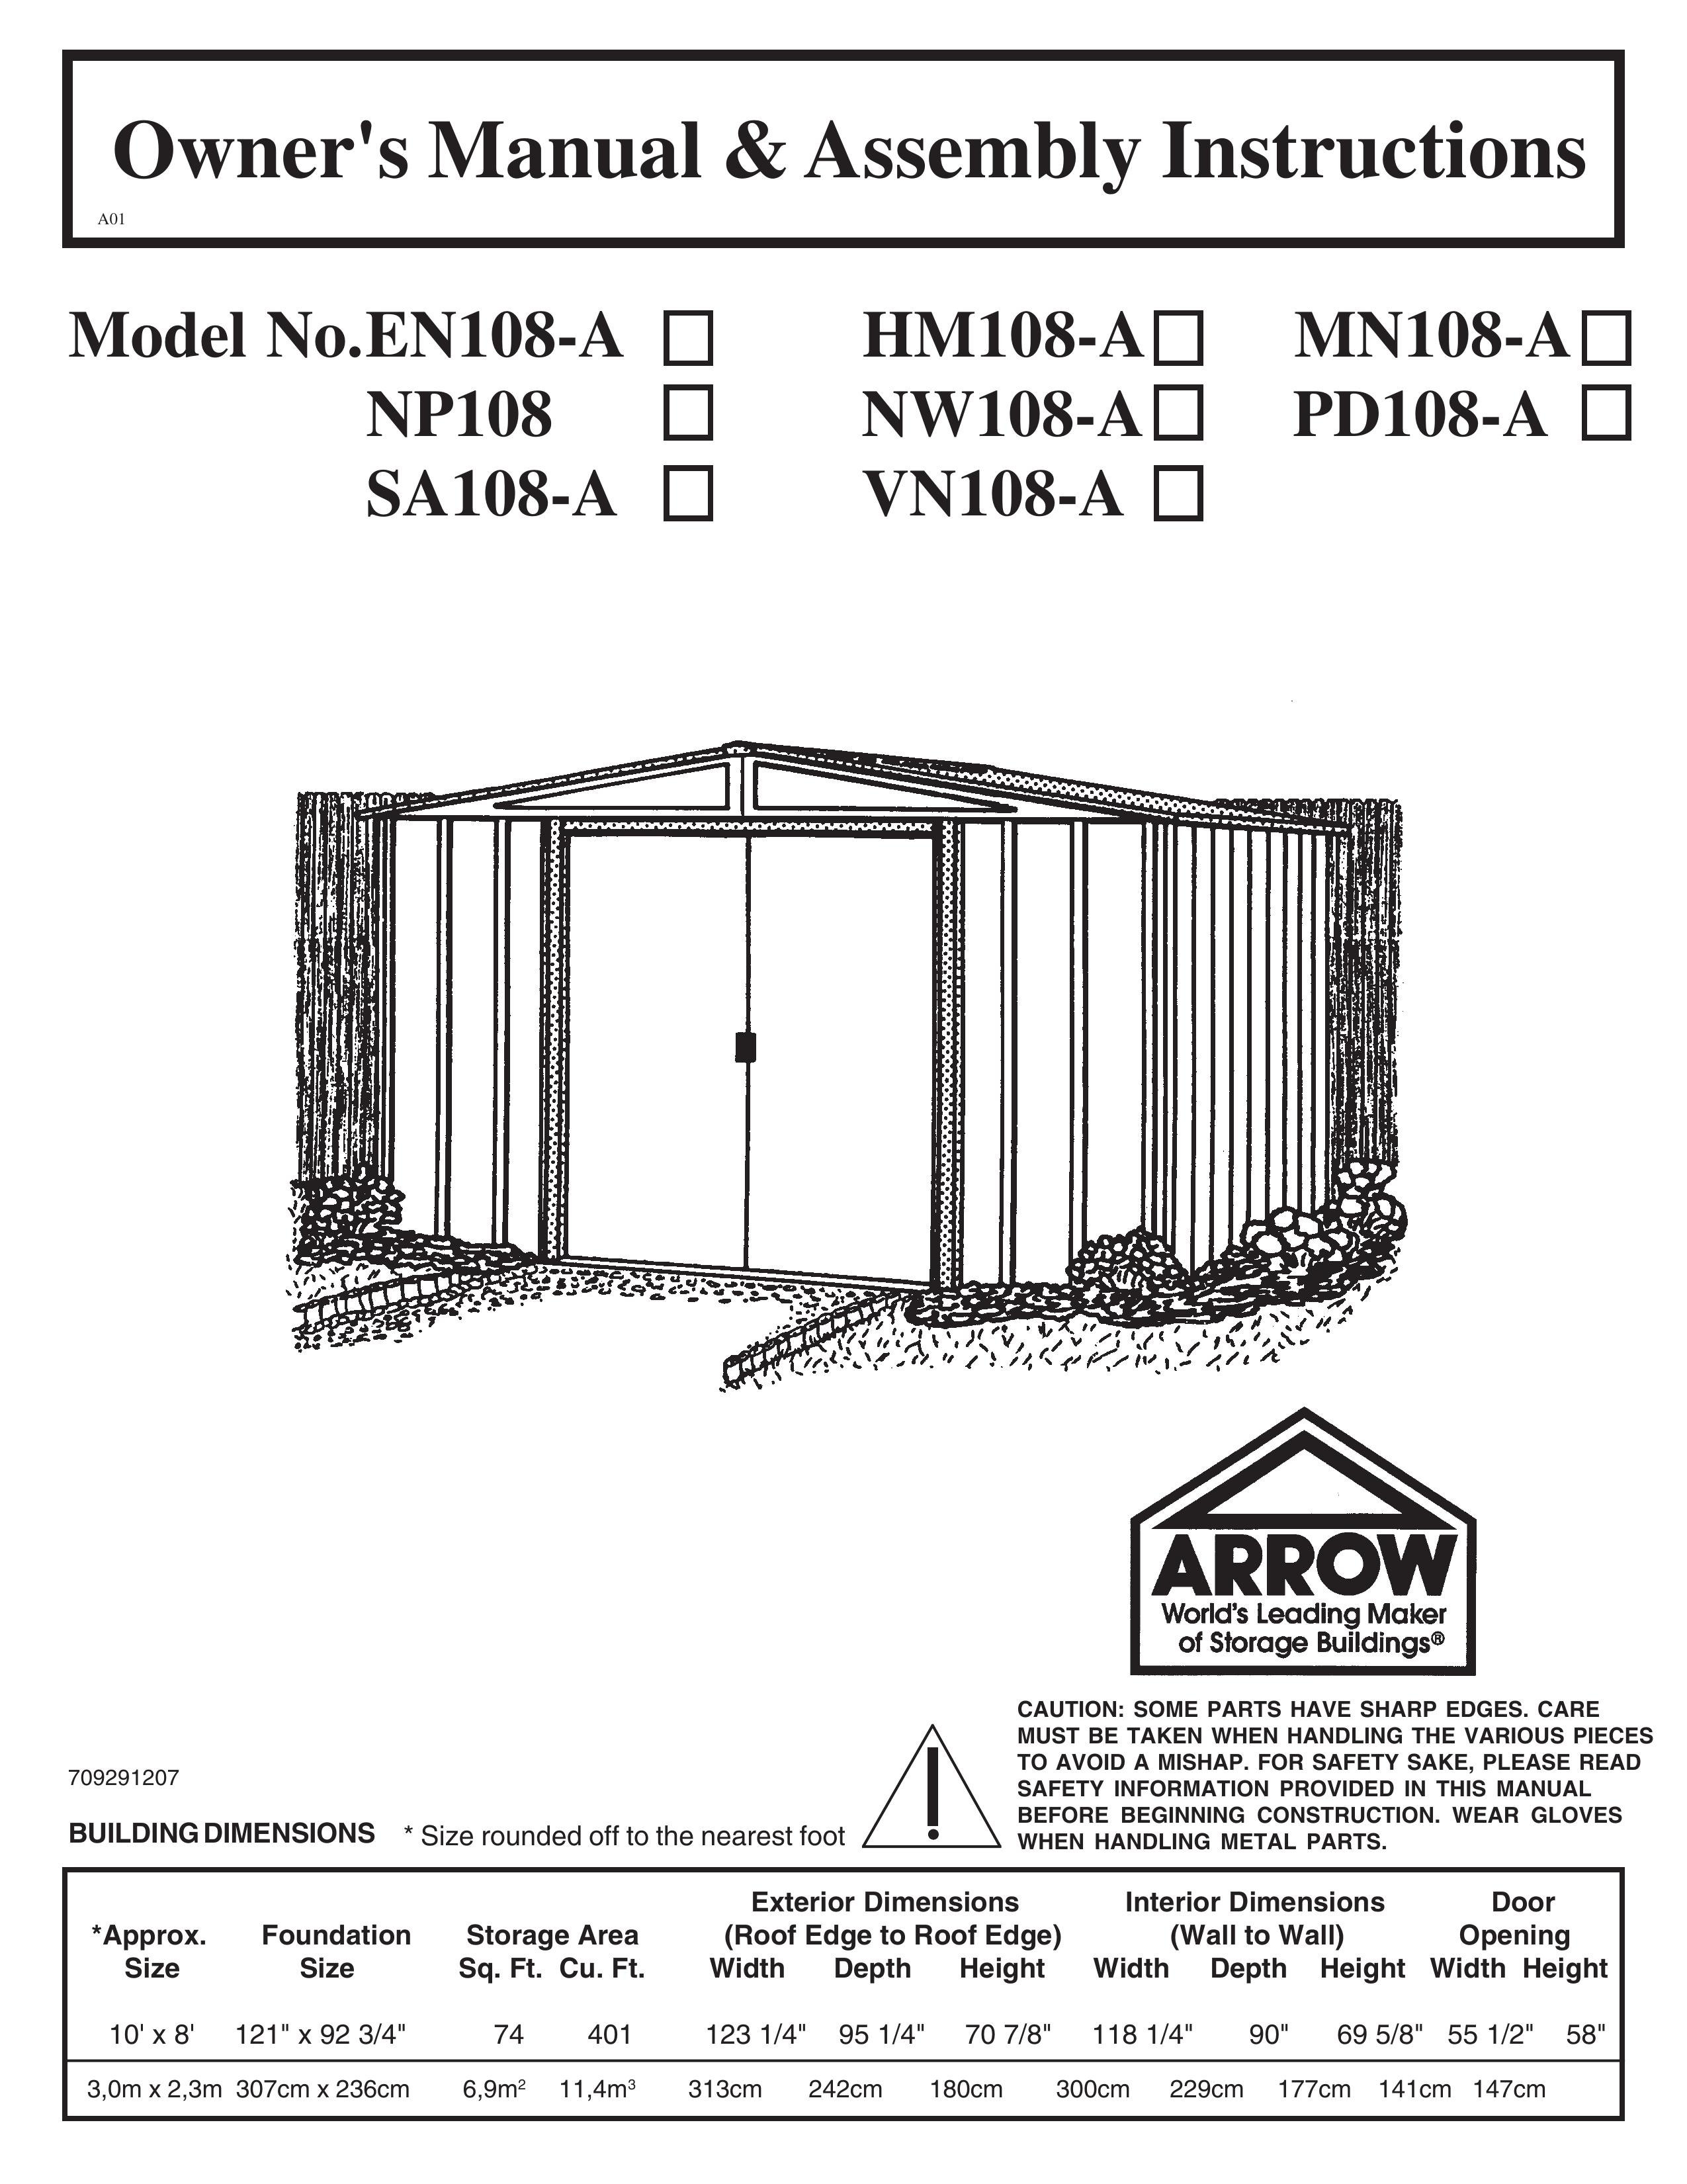 Arrow Plastic MN108-A Outdoor Storage User Manual